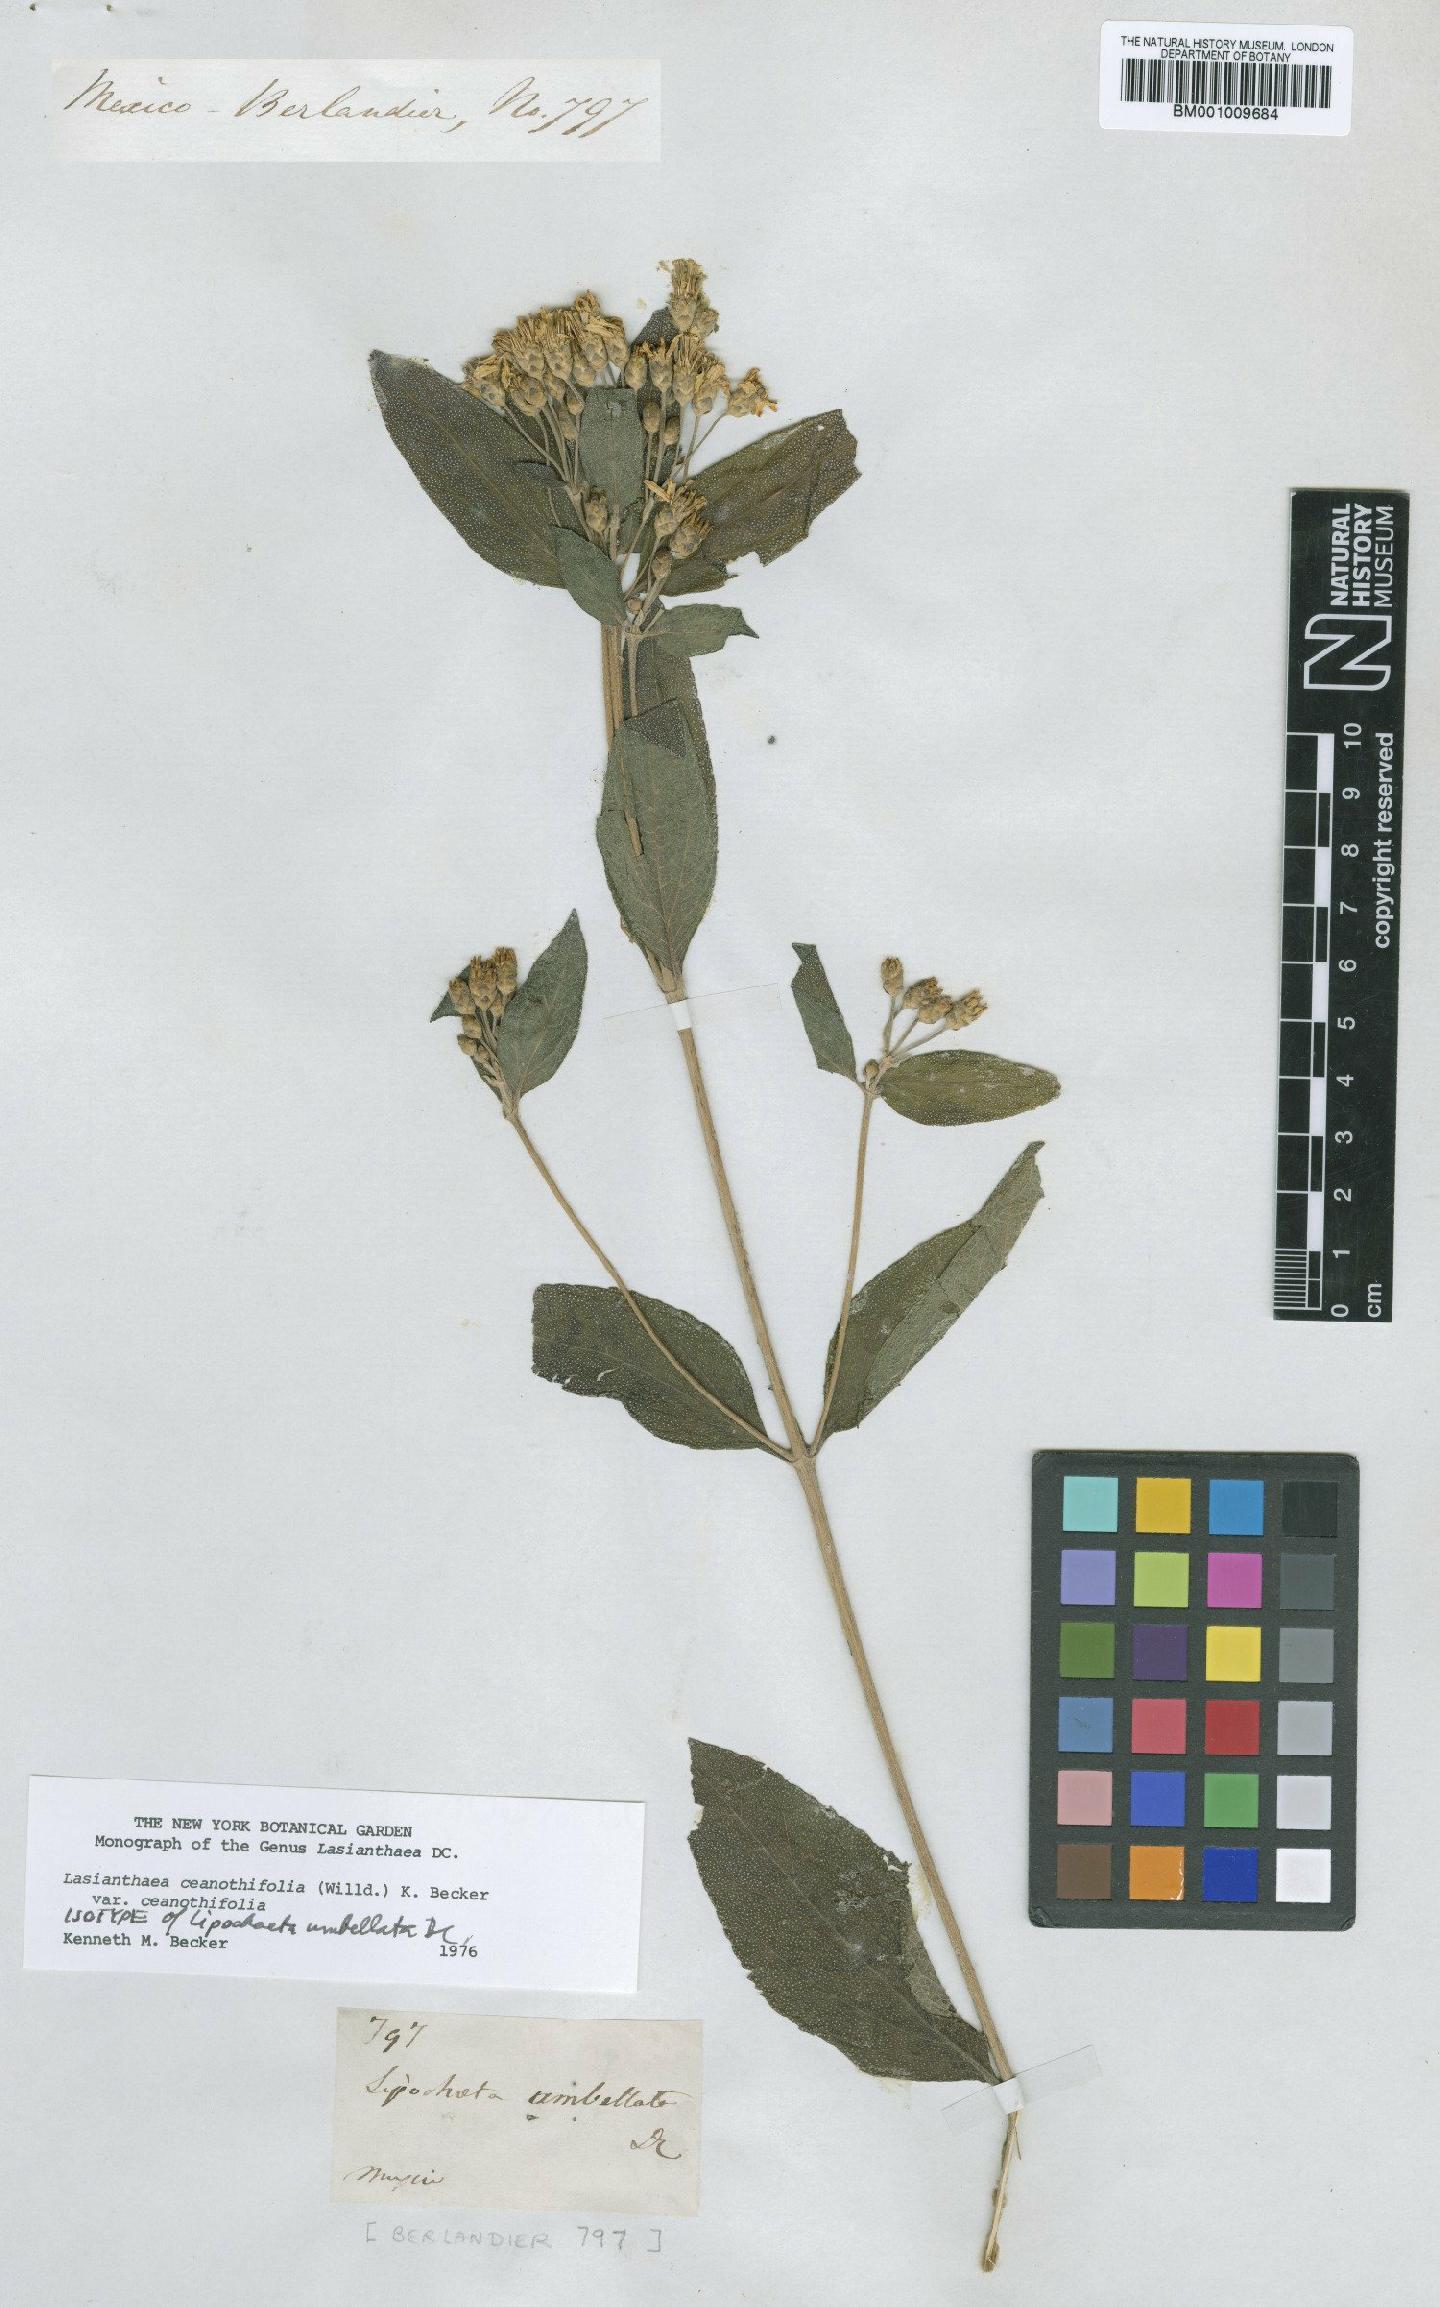 To NHMUK collection (Lasianthaea ceanothifolia var. ceanothifolia (Willd.) K.M.Becker; Isotype; NHMUK:ecatalogue:619187)